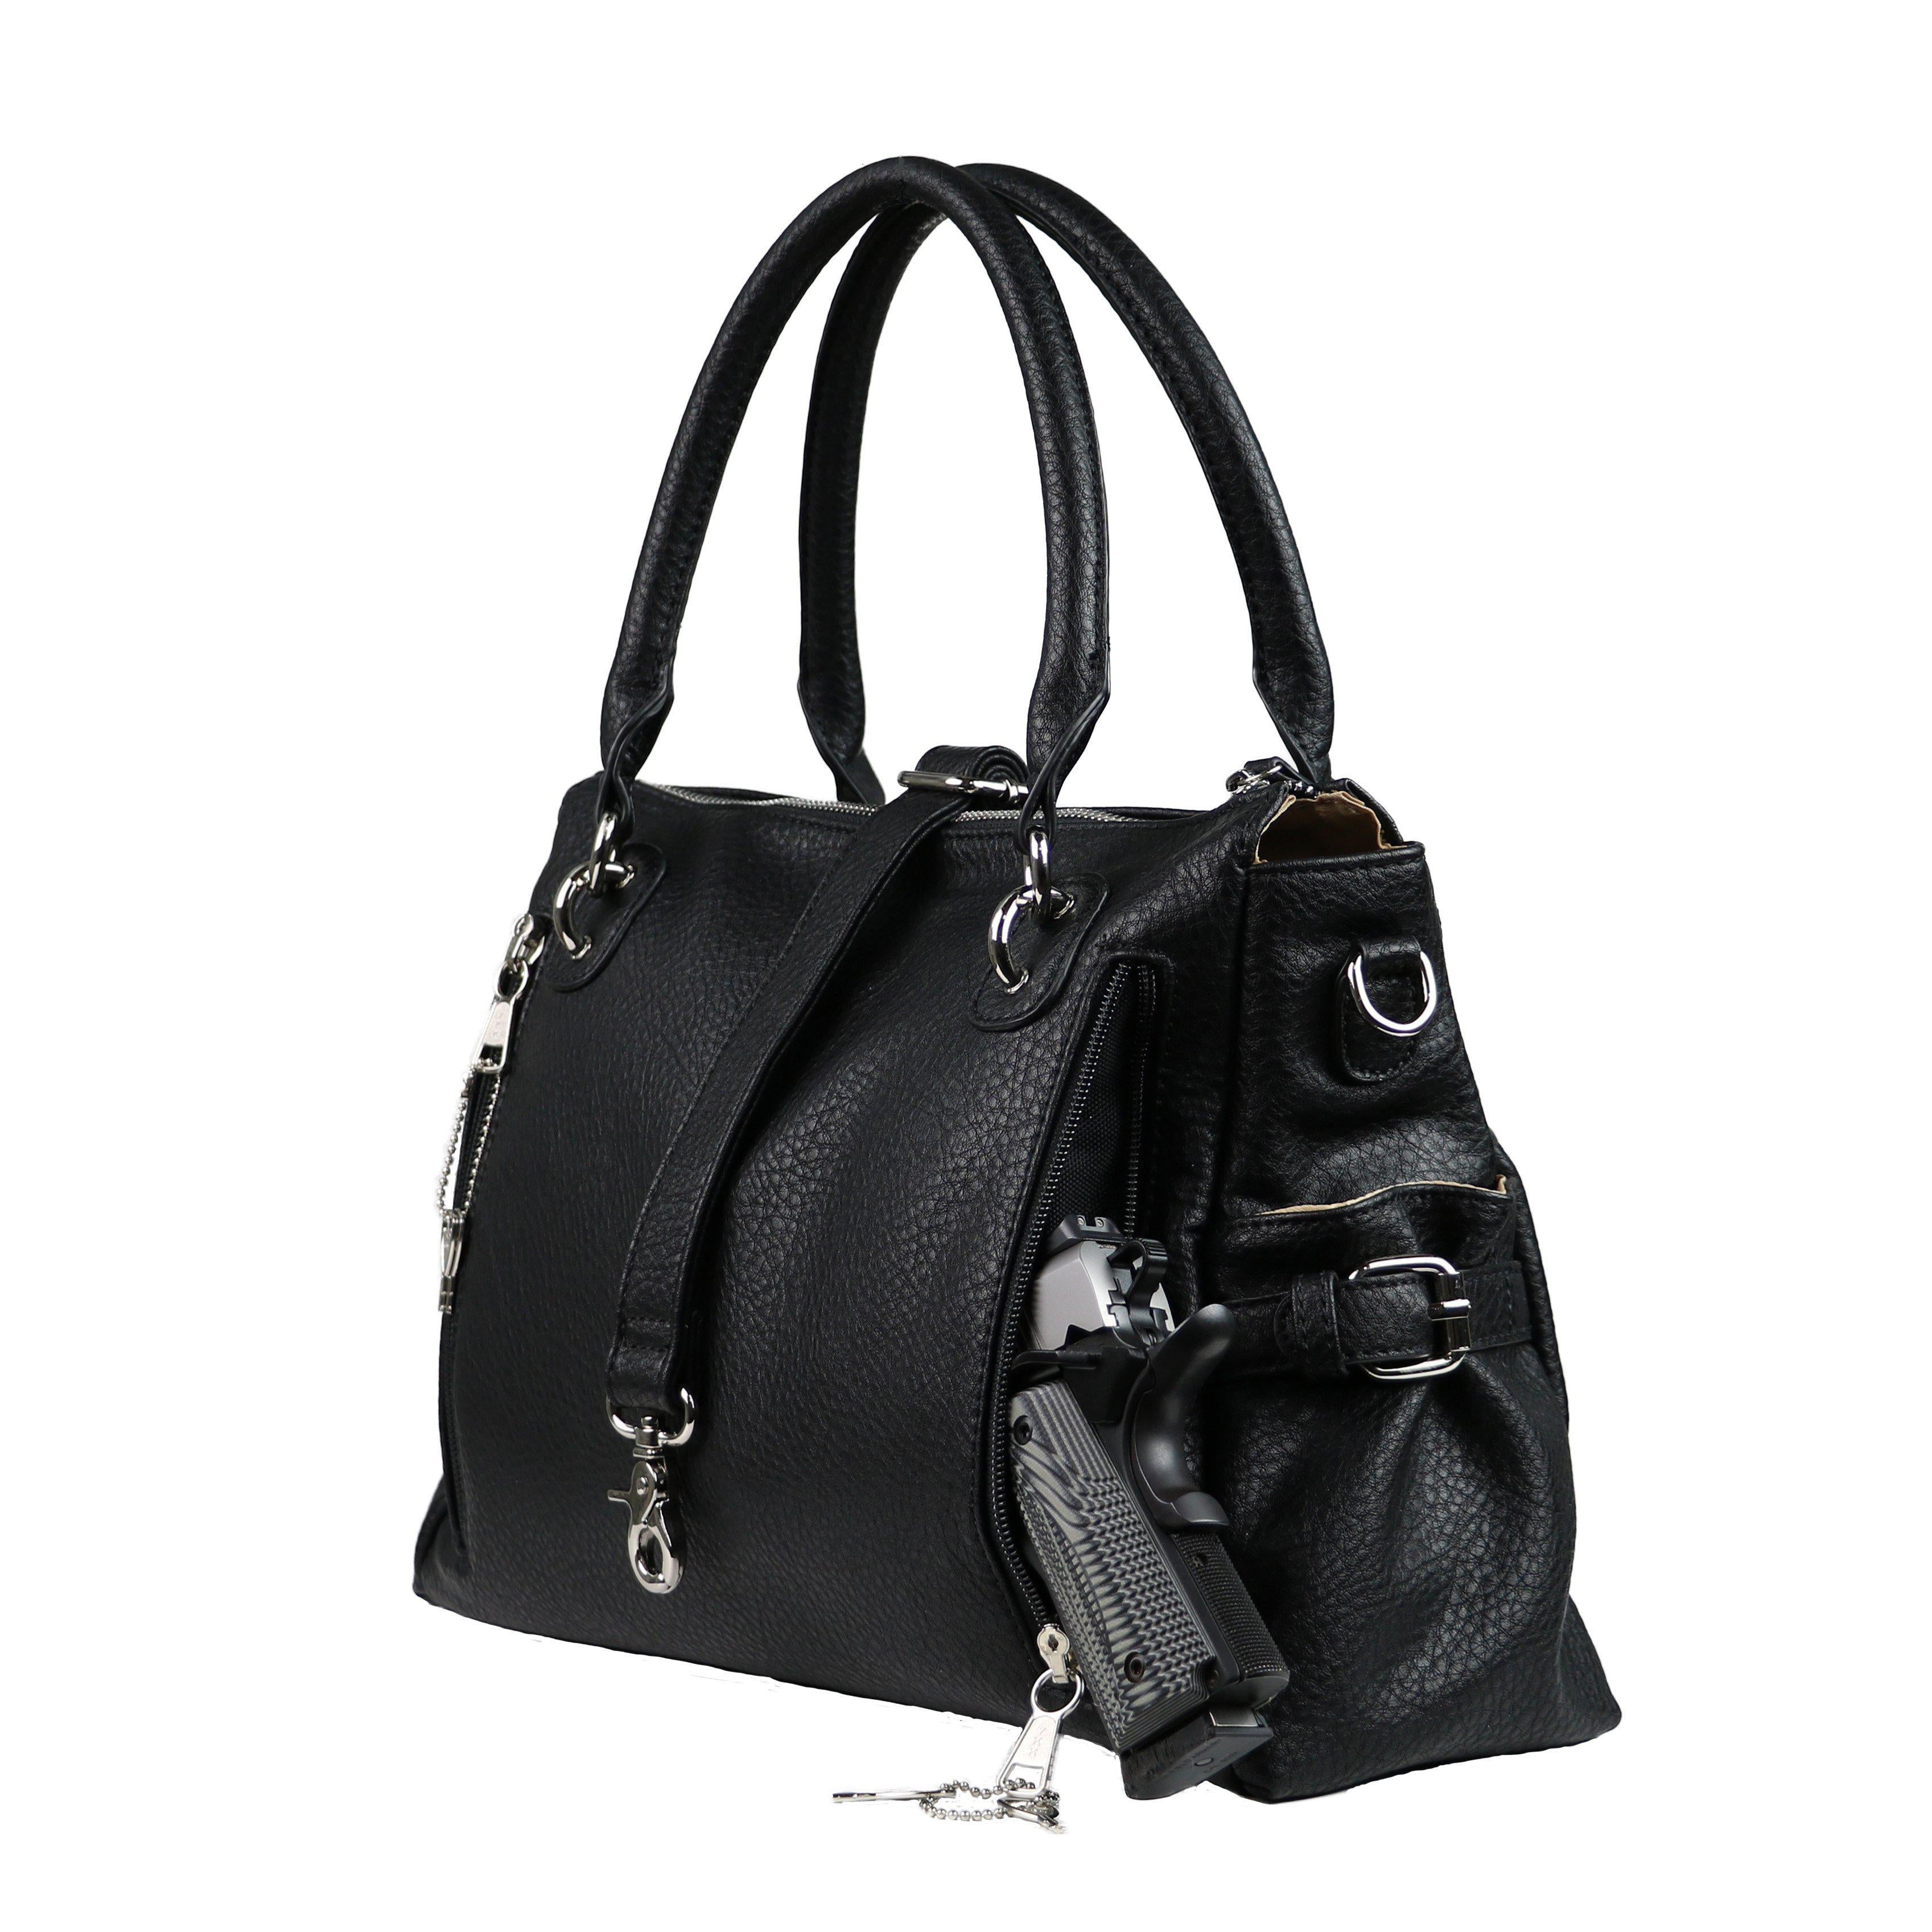 Michael Kors Black Leather Satchel Handbag Purse - beyond exchange